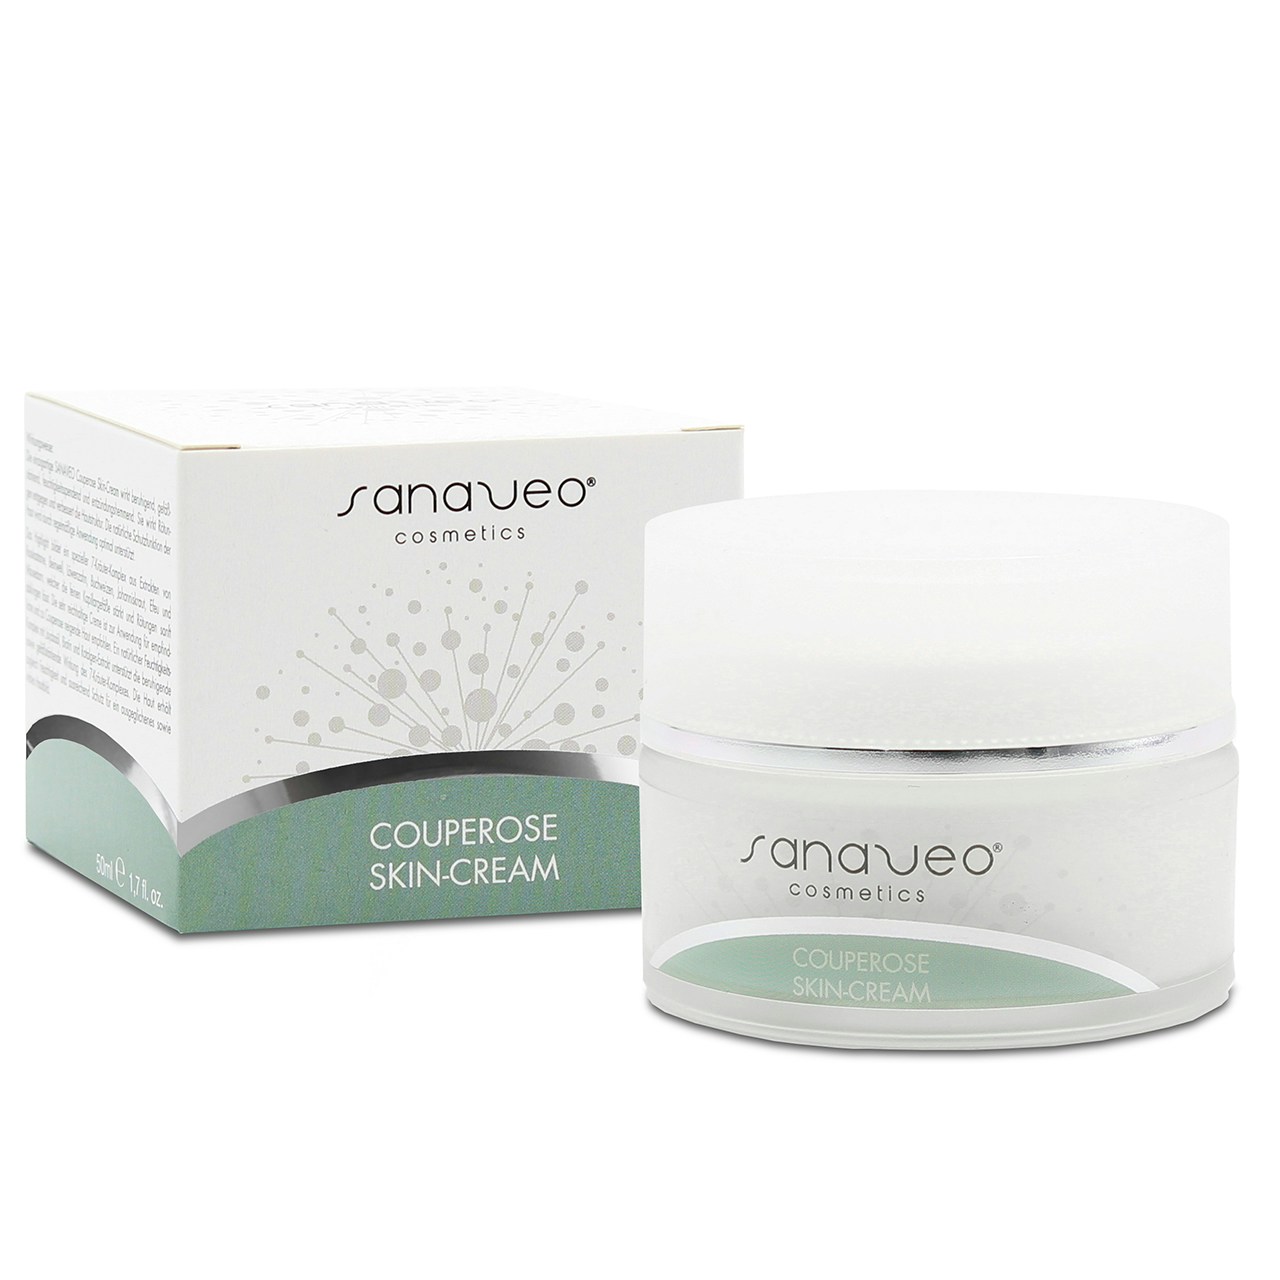 Sanaveo Couperose Skin-Cream